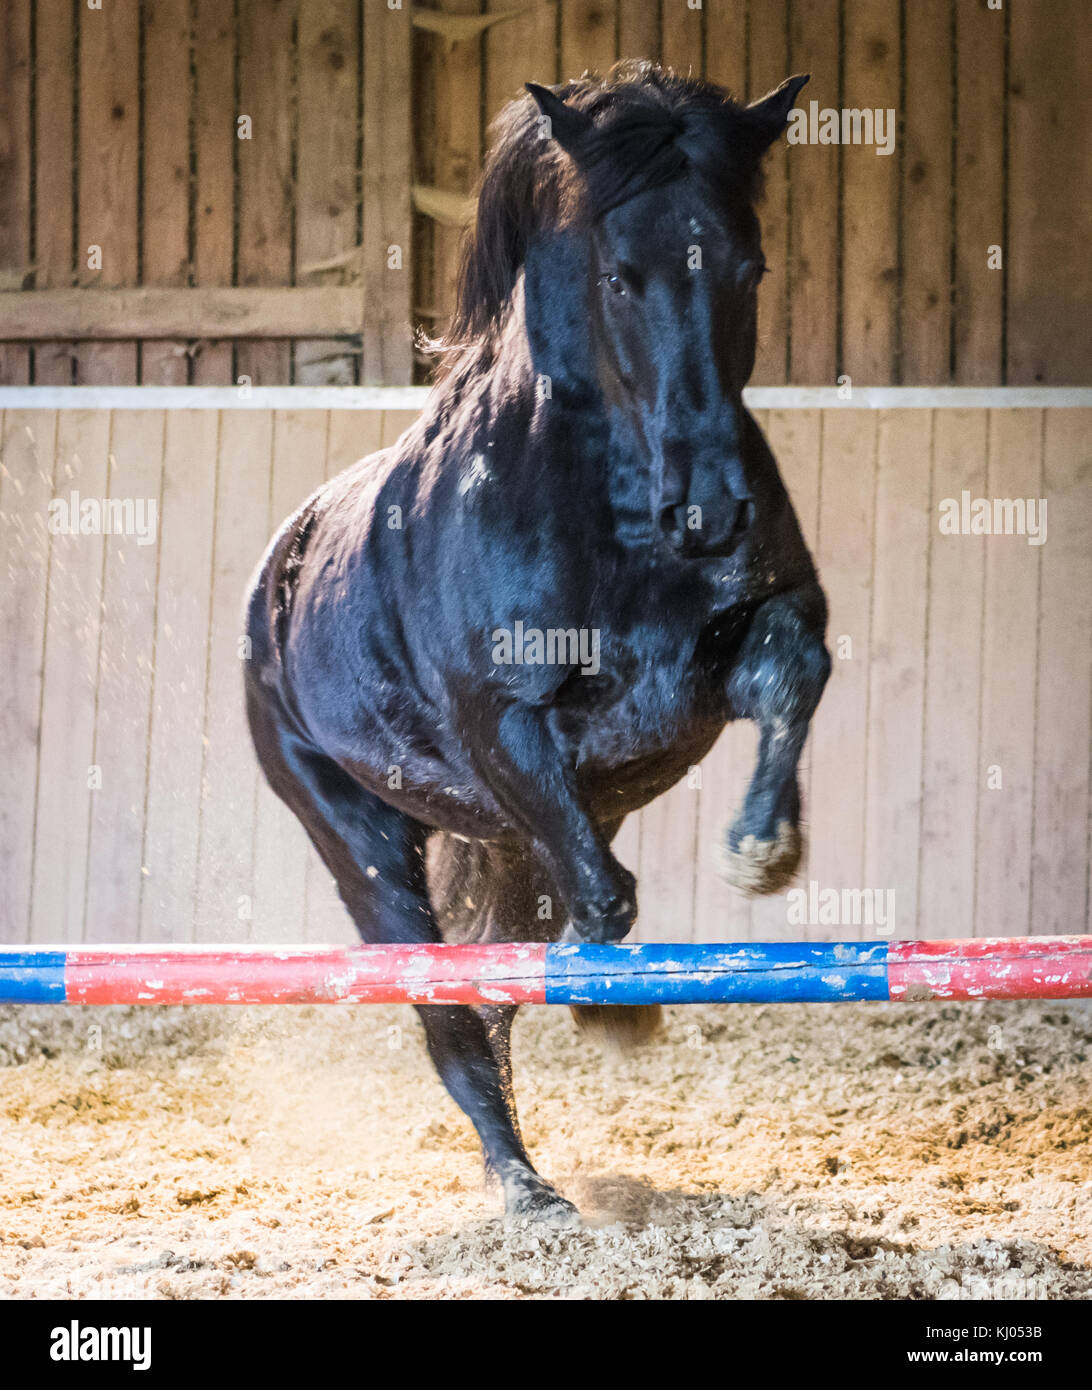 Arabian Horse negro saltando en la arena Foto de stock